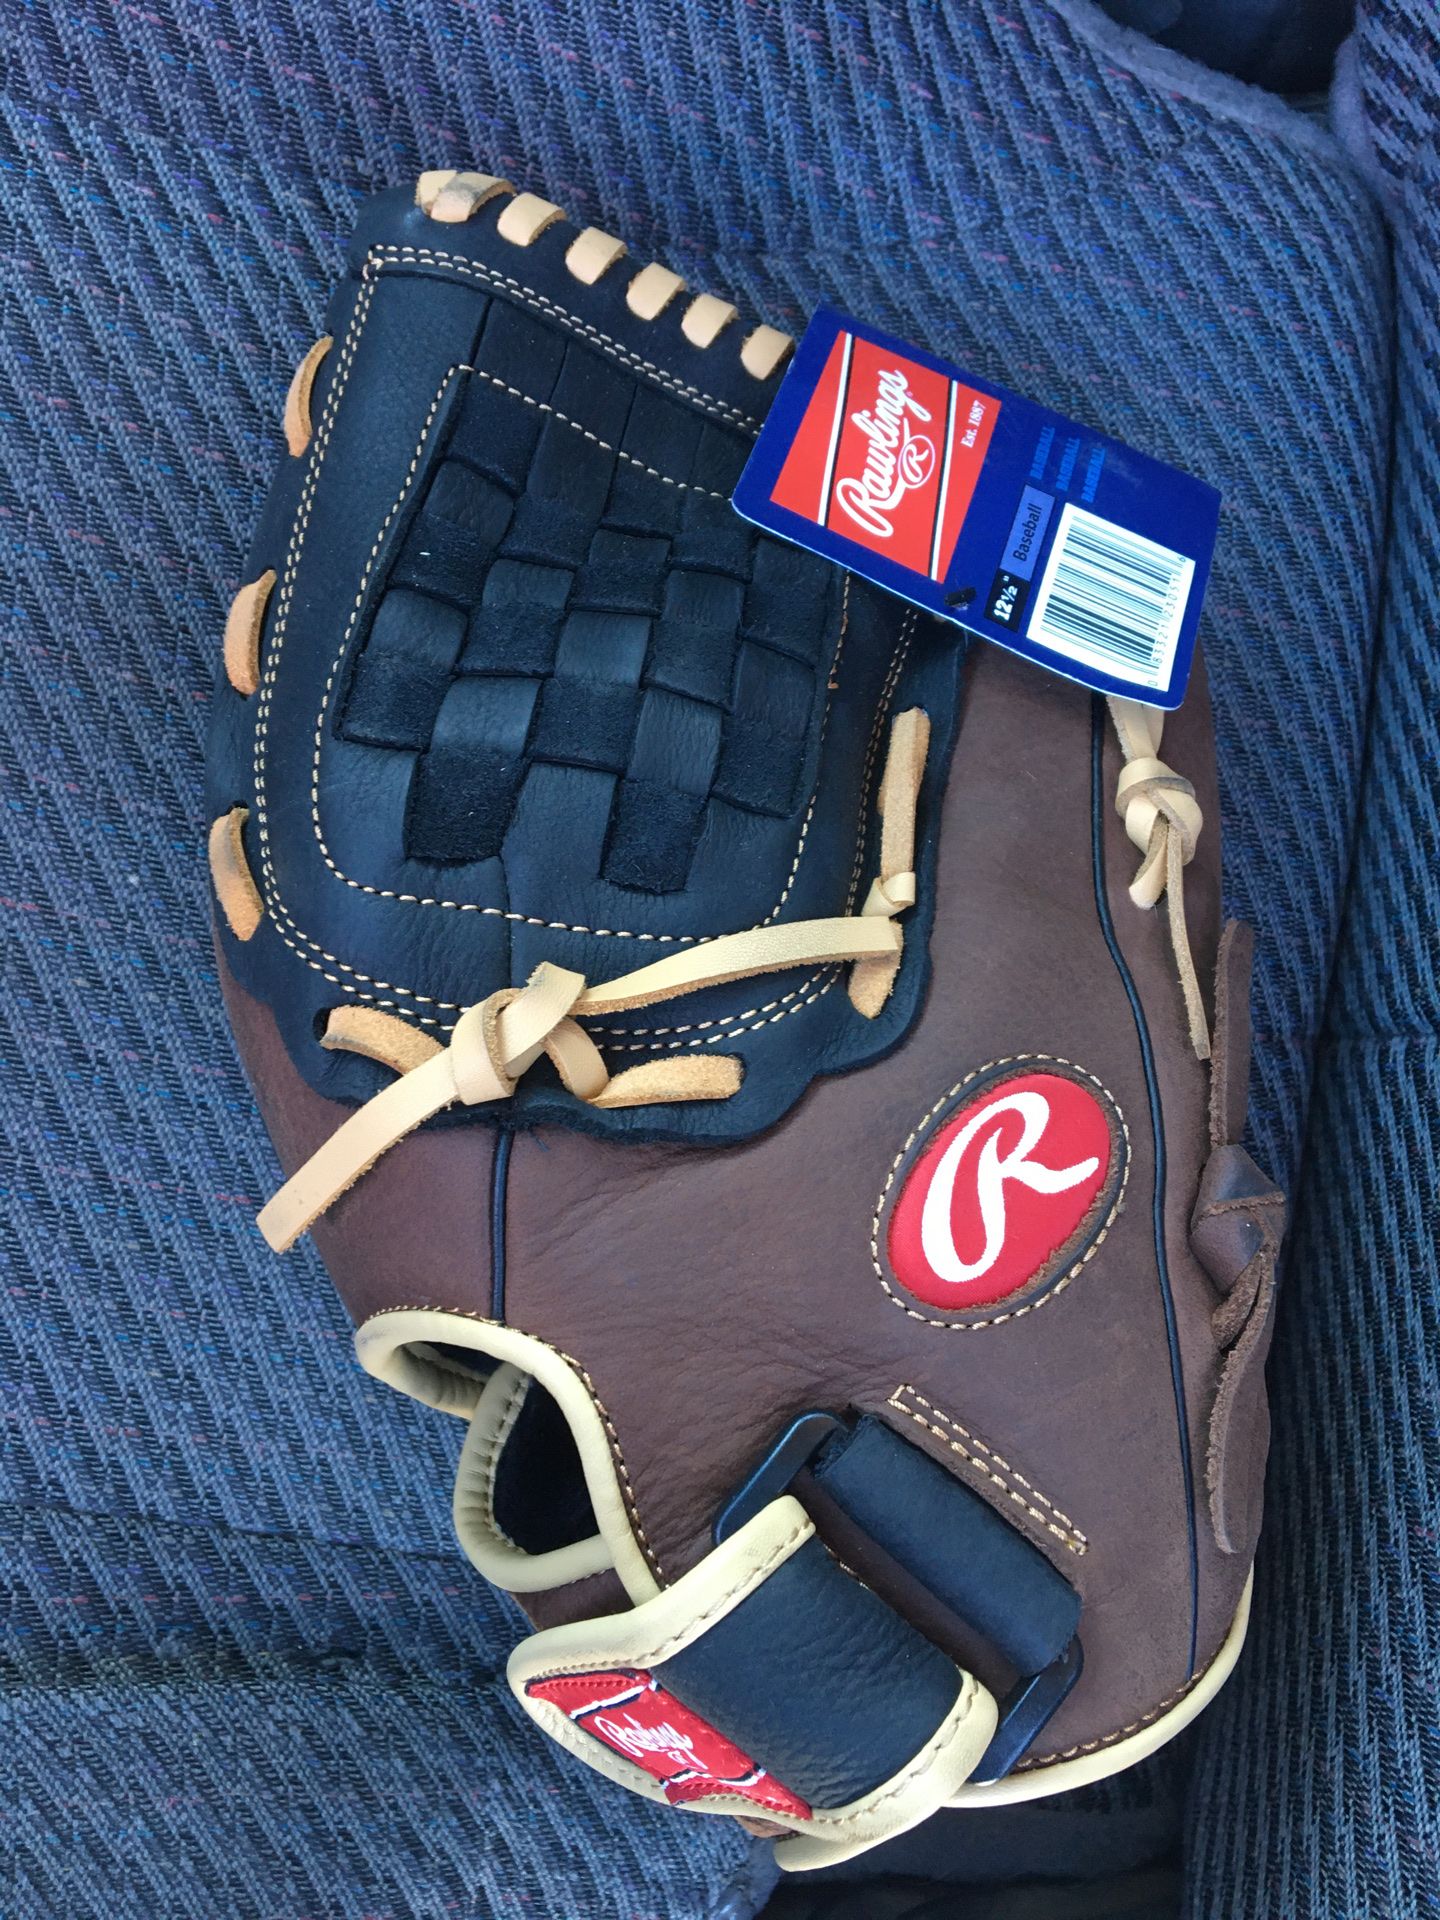 Baseball gloves and ball New.